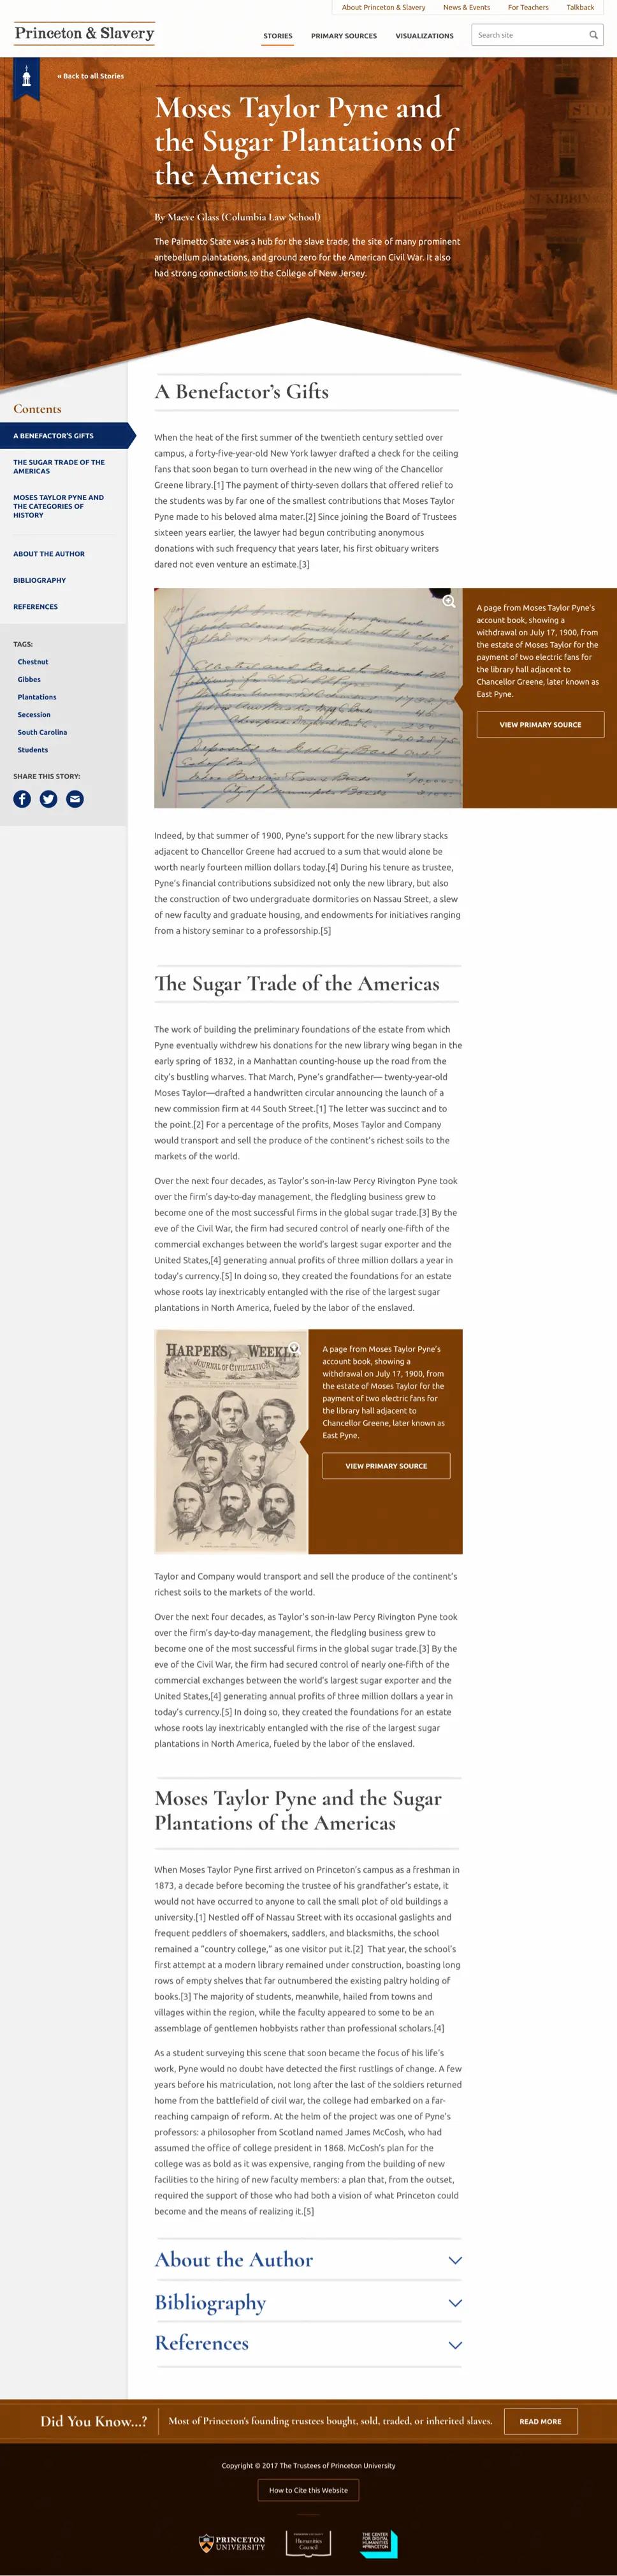 A screenshot of a Princeton & Slavery "Story" page.